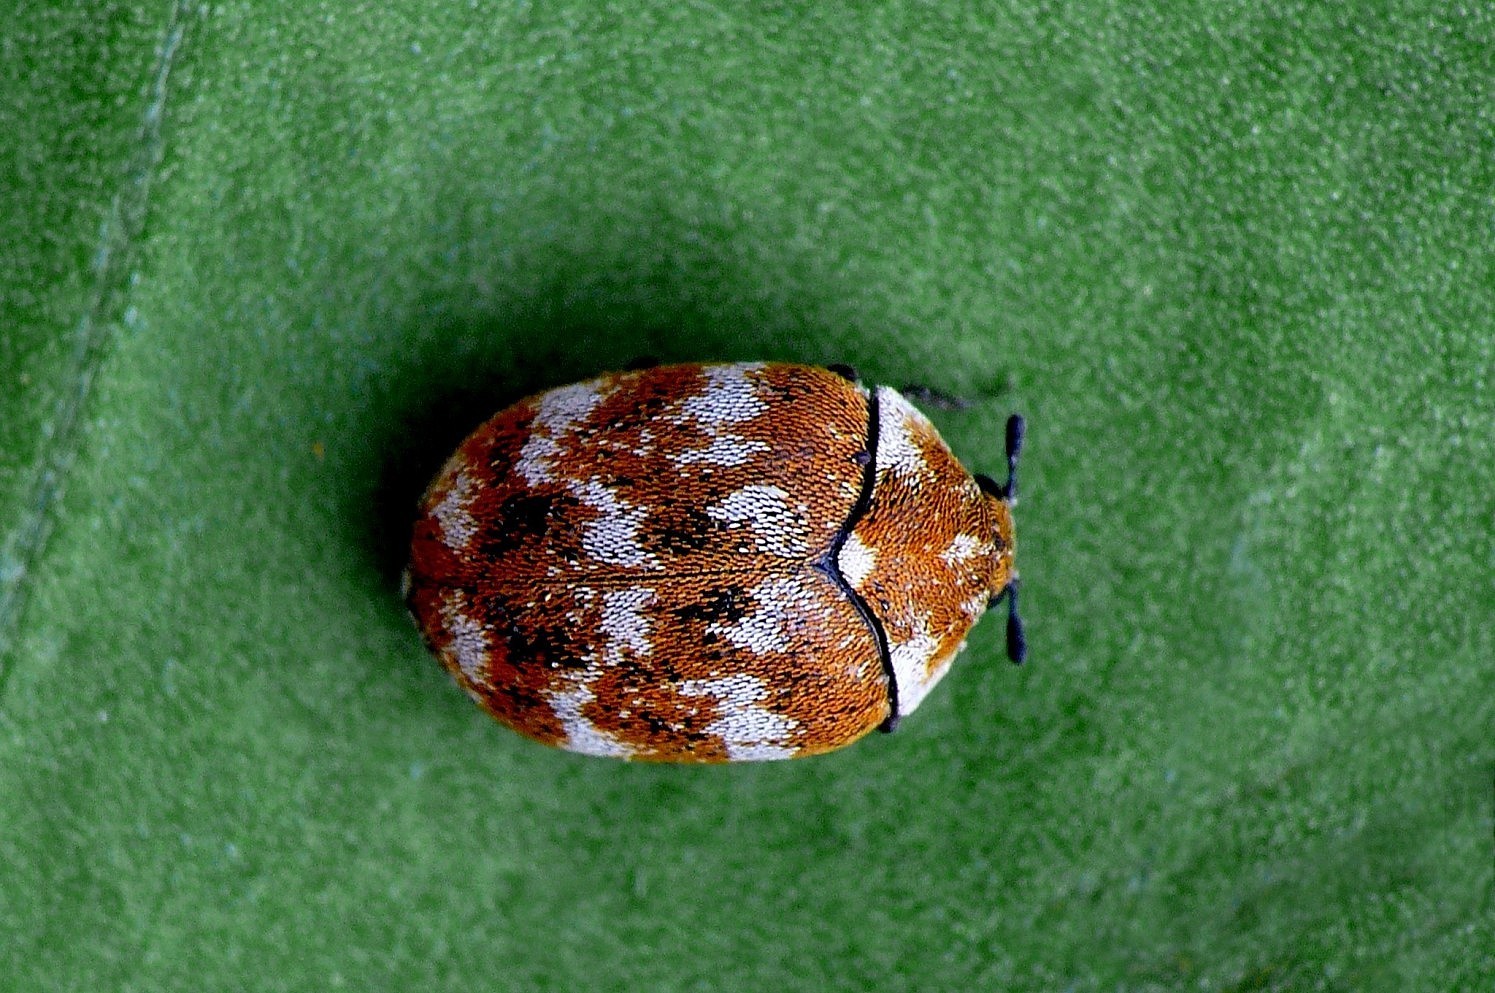 ... carpet beetle